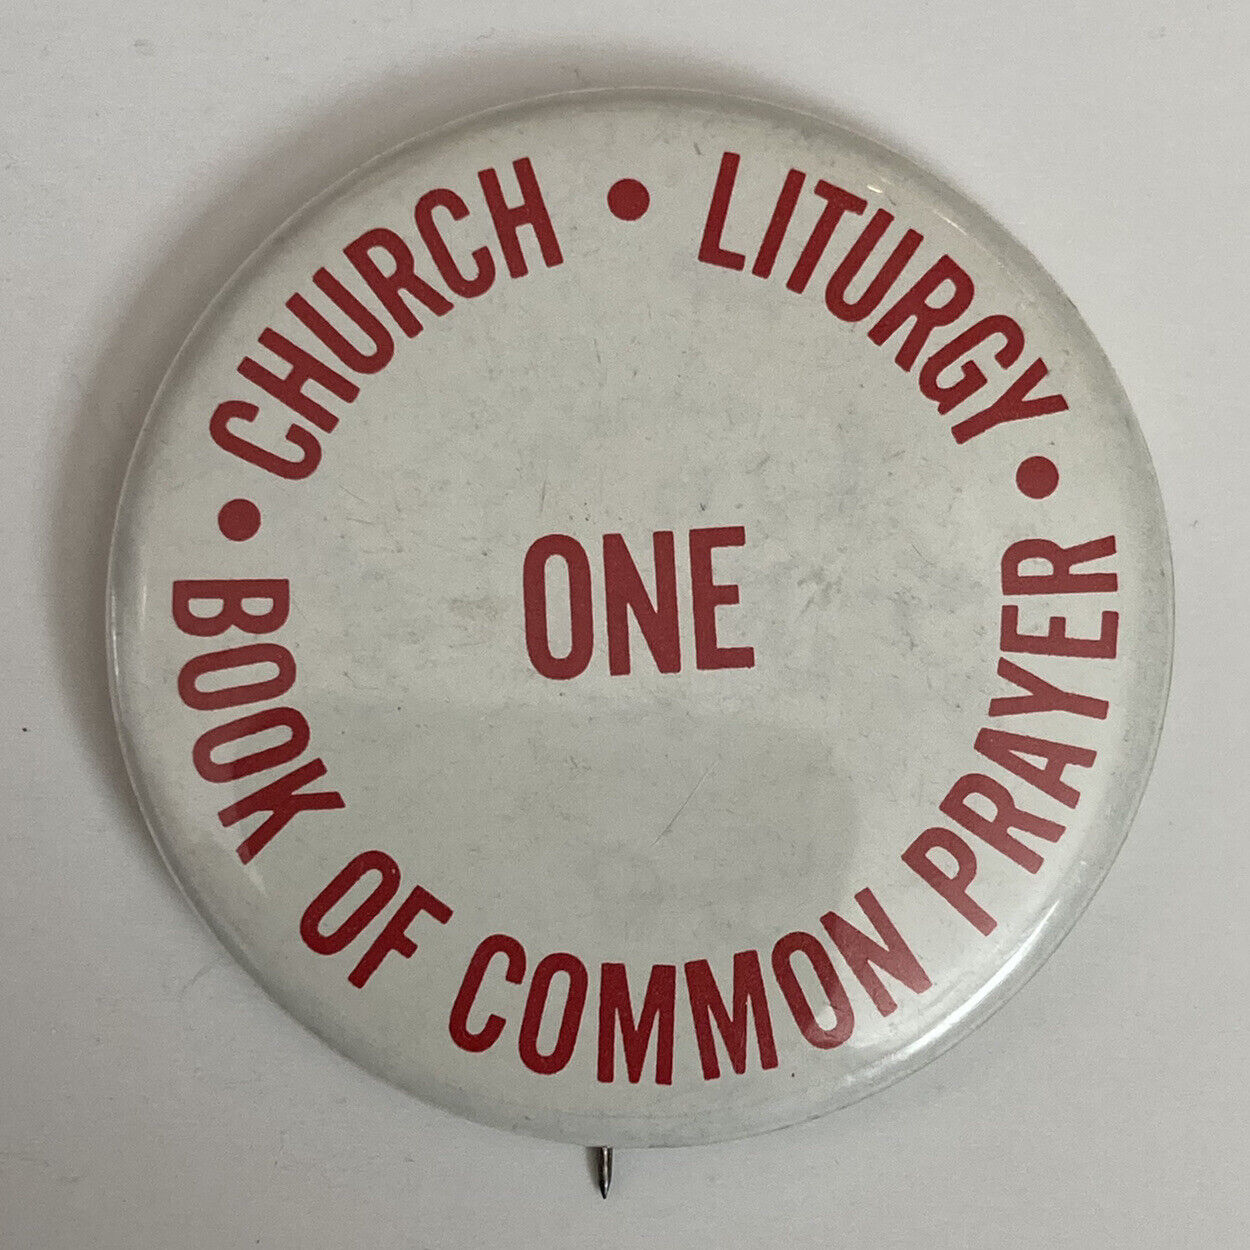 Vintage Round Novelty Pinback Button One Church Liturgy Book of Common Prayer